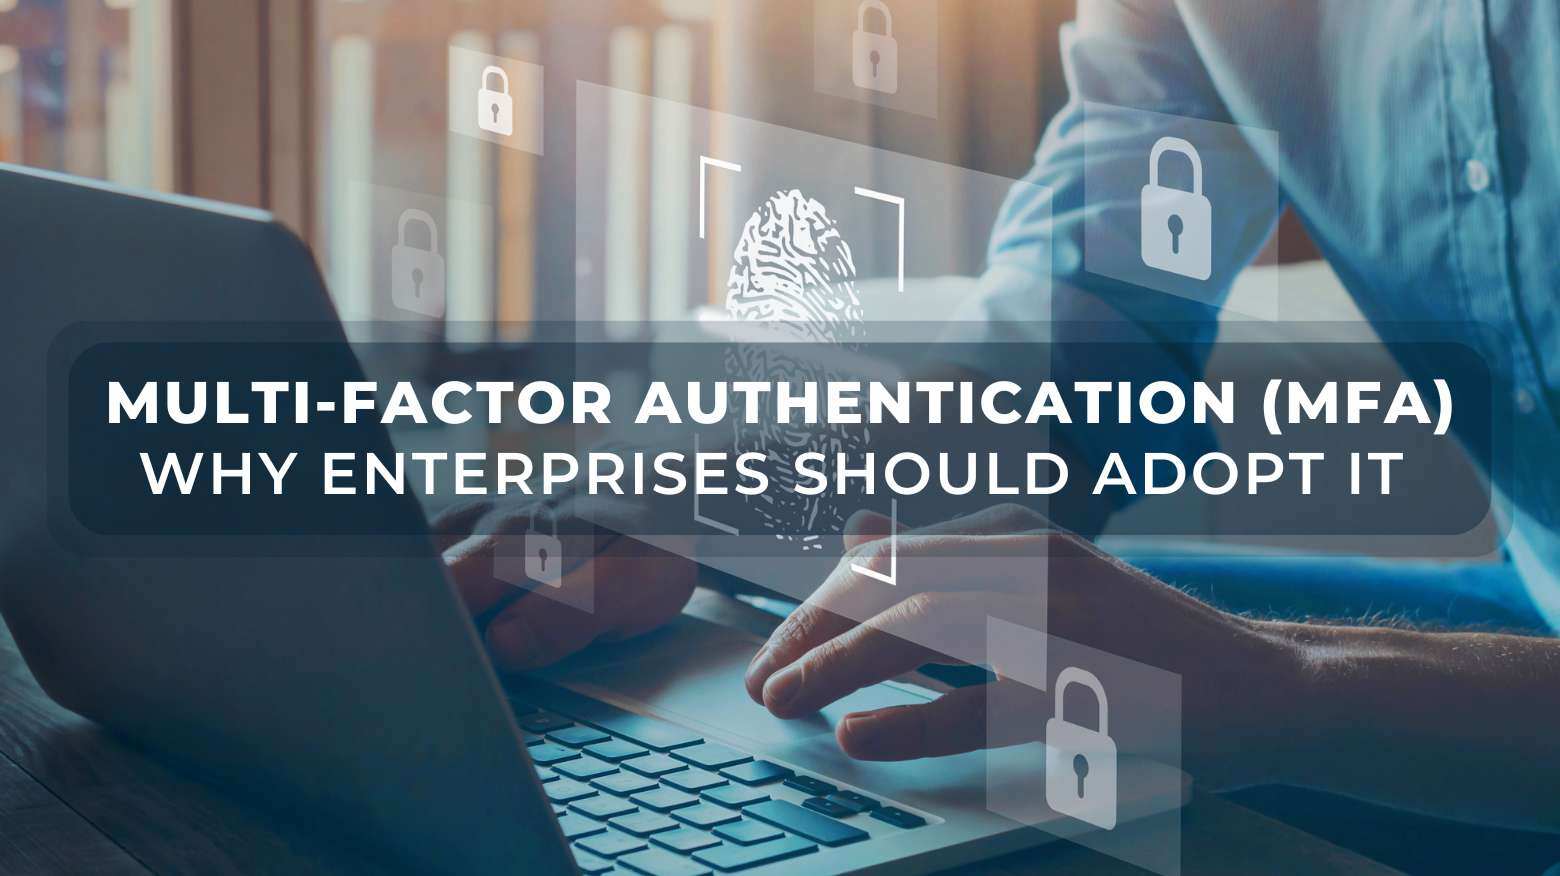 7 Reasons for Enterprises to Adopt Multi-Factor Authentication (MFA)